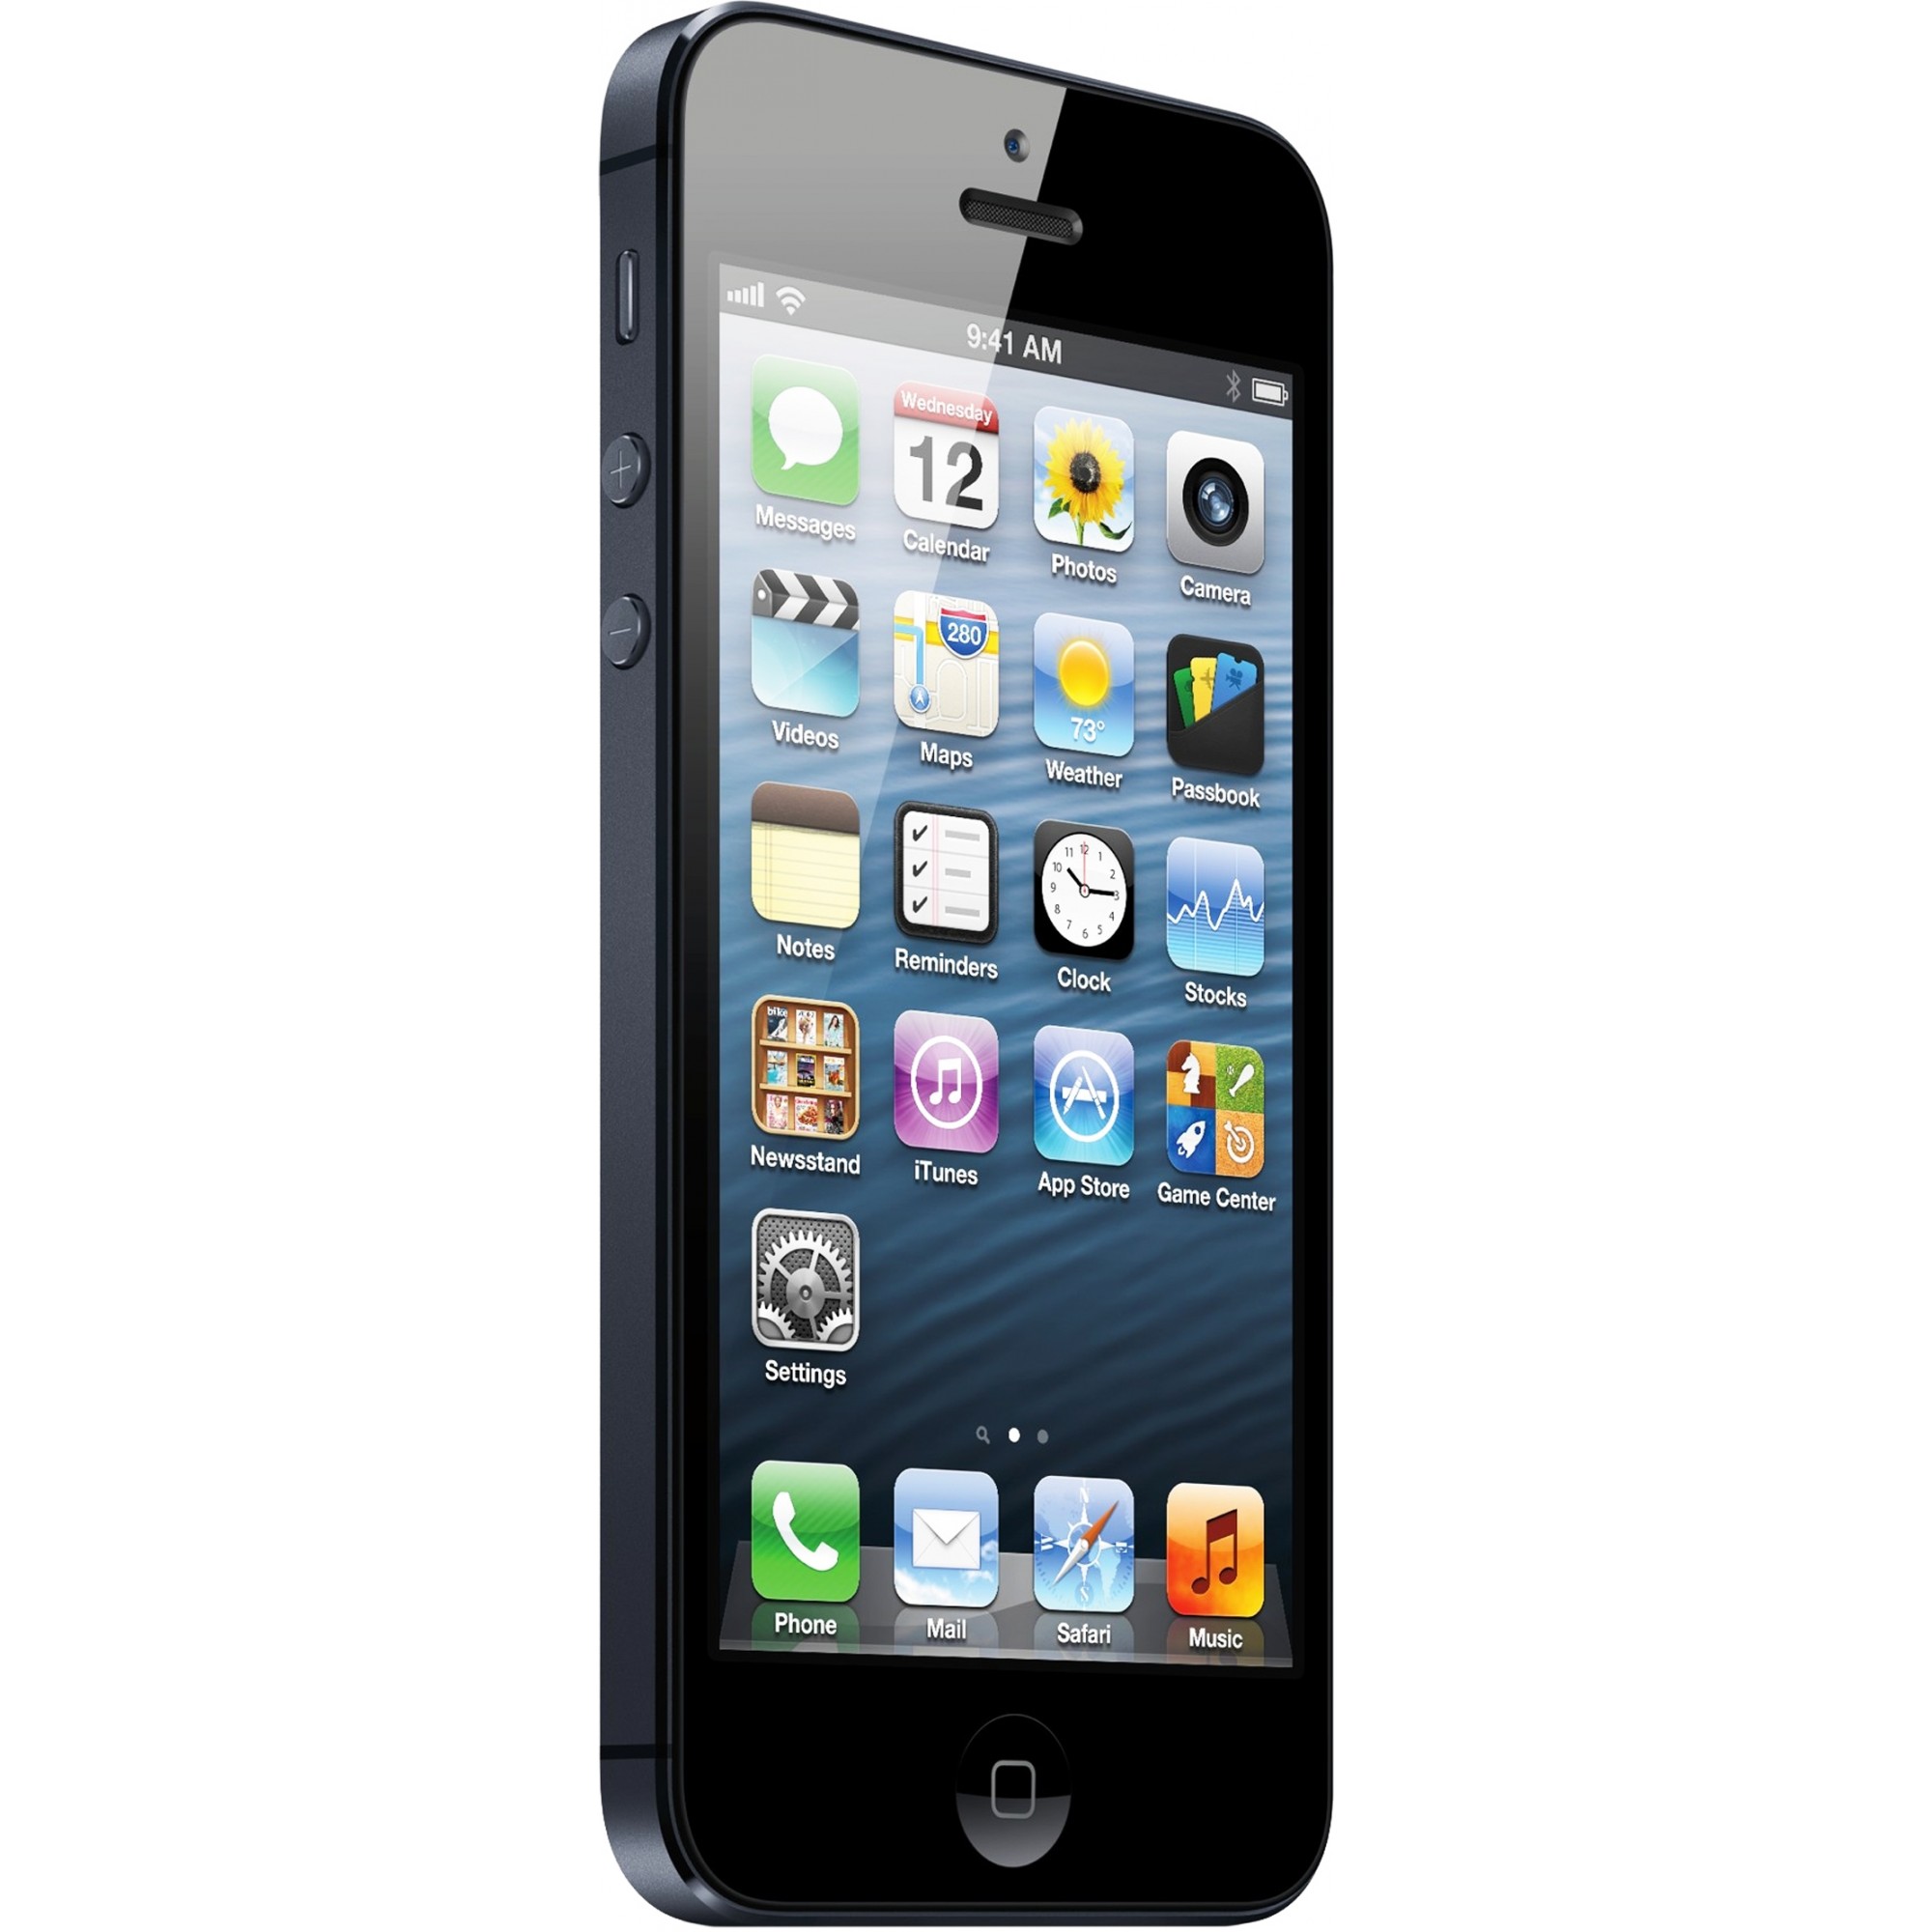 Apple iPhone 5 32GB (Black) - зображення 1